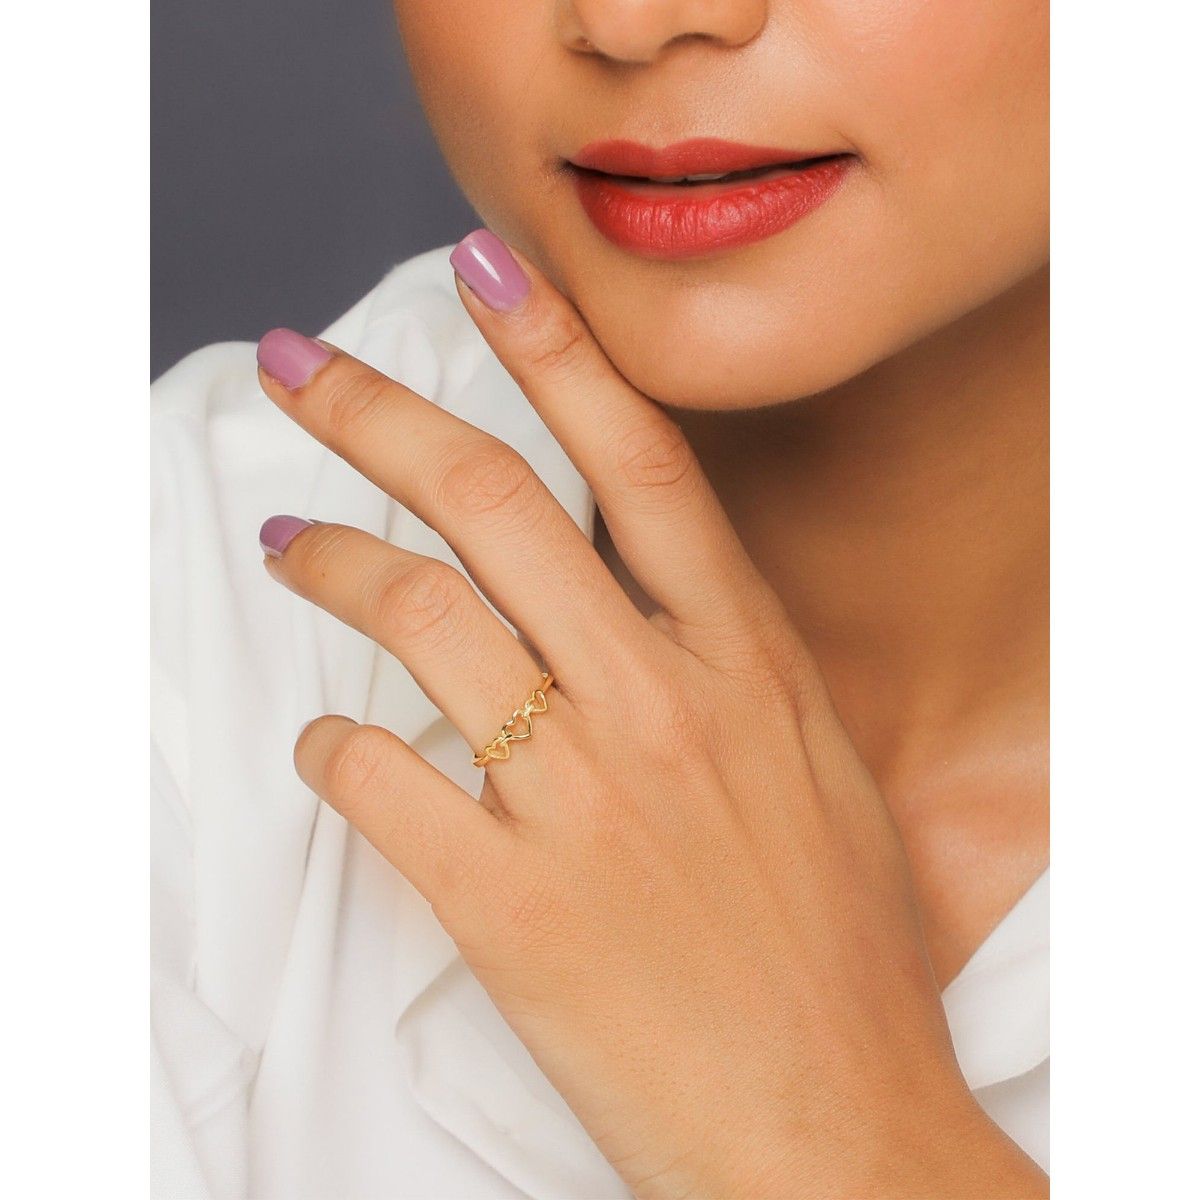 Aditya Seal wore an engagement ring to Anushka Ranjan in a romantic style,  See post | NewsTrack English 1